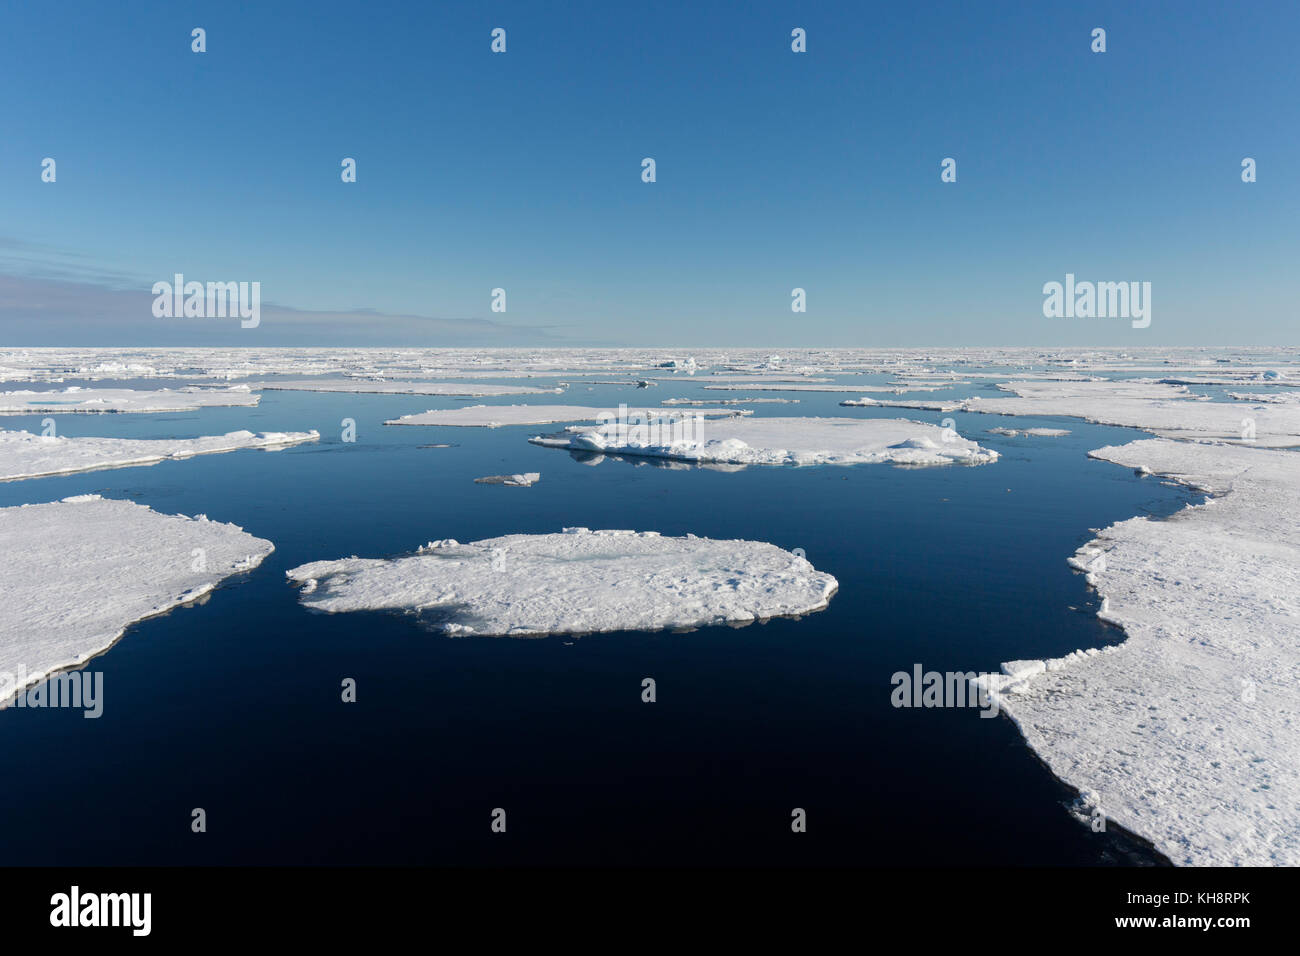 https://c8.alamy.com/comp/KH8RPK/drift-ice-ice-floes-in-the-arctic-ocean-nordaustlandet-north-east-KH8RPK.jpg